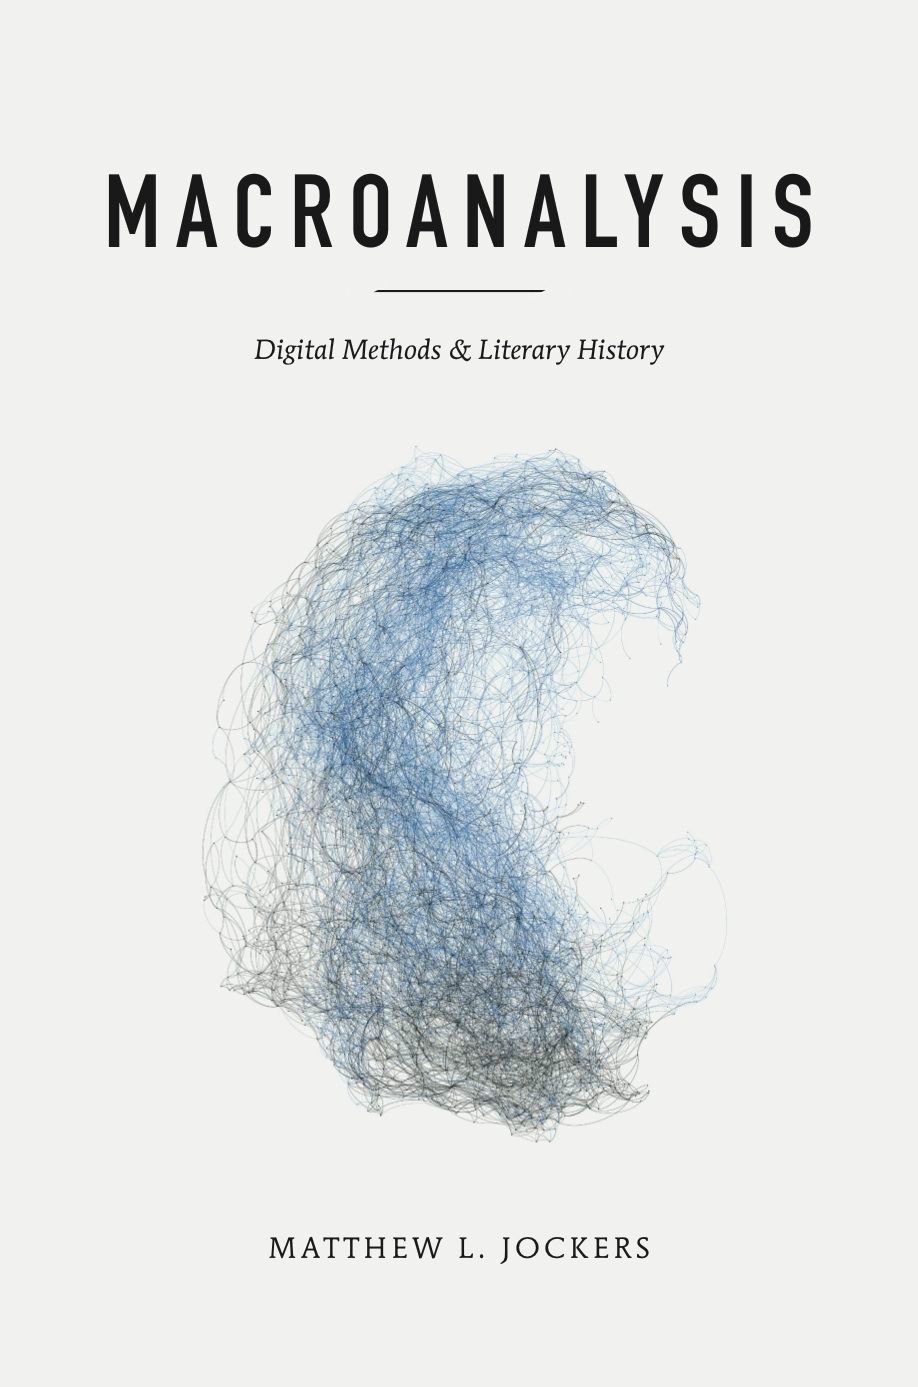 An Impossible Number of Books: Matthew L. Jockers's "Macroanalysis"